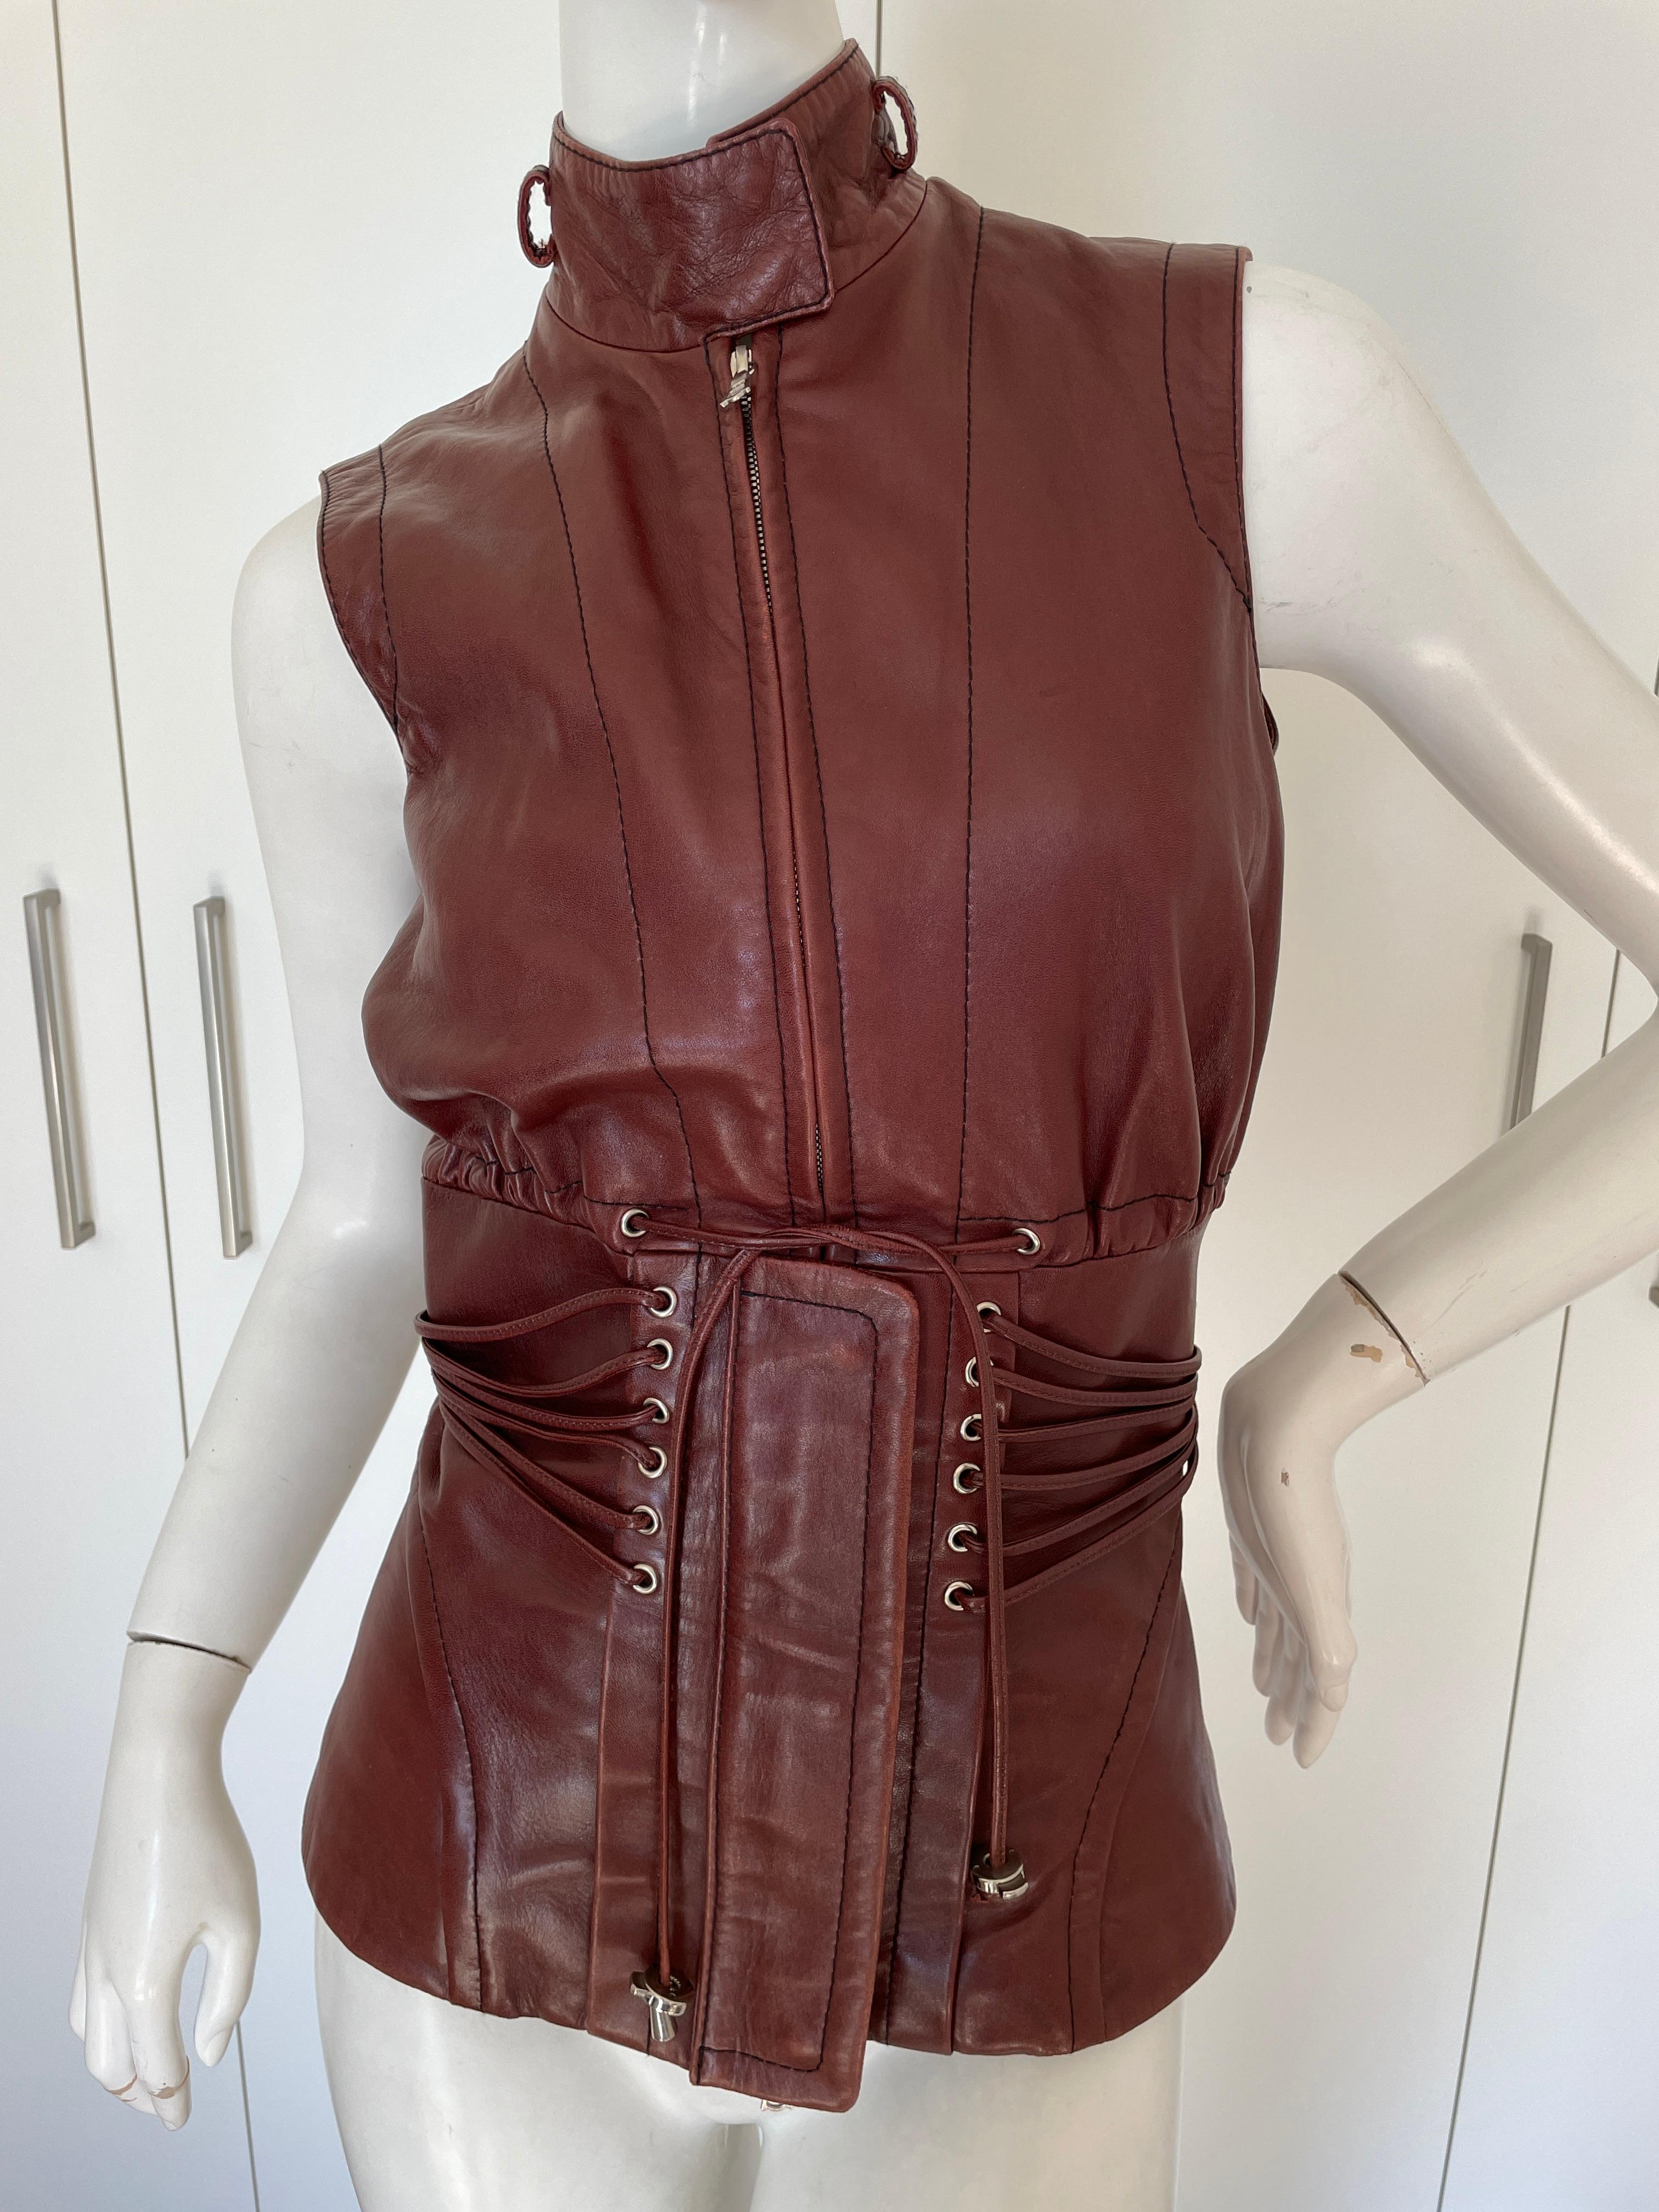  Gianfranco Ferre Vintage Lambskin Leather Moto Vest with Corset Lacing Details For Sale 1